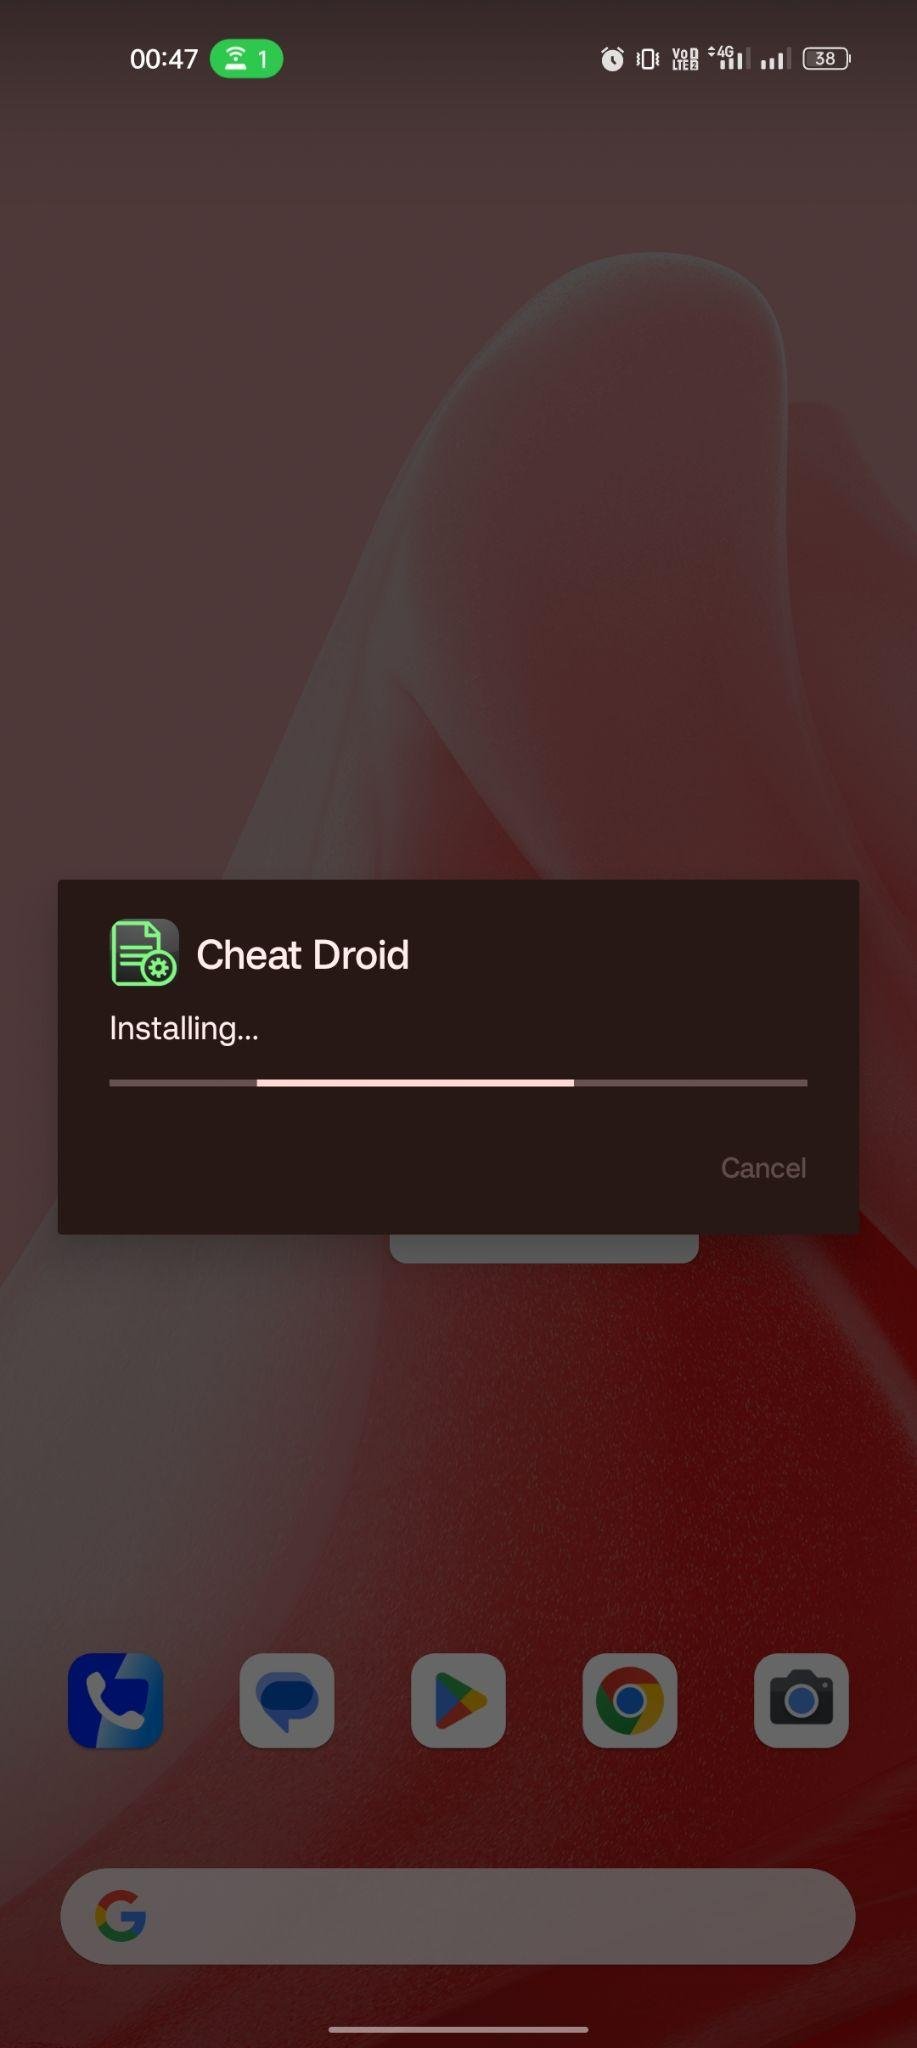 Cheat Droid Pro apk installing